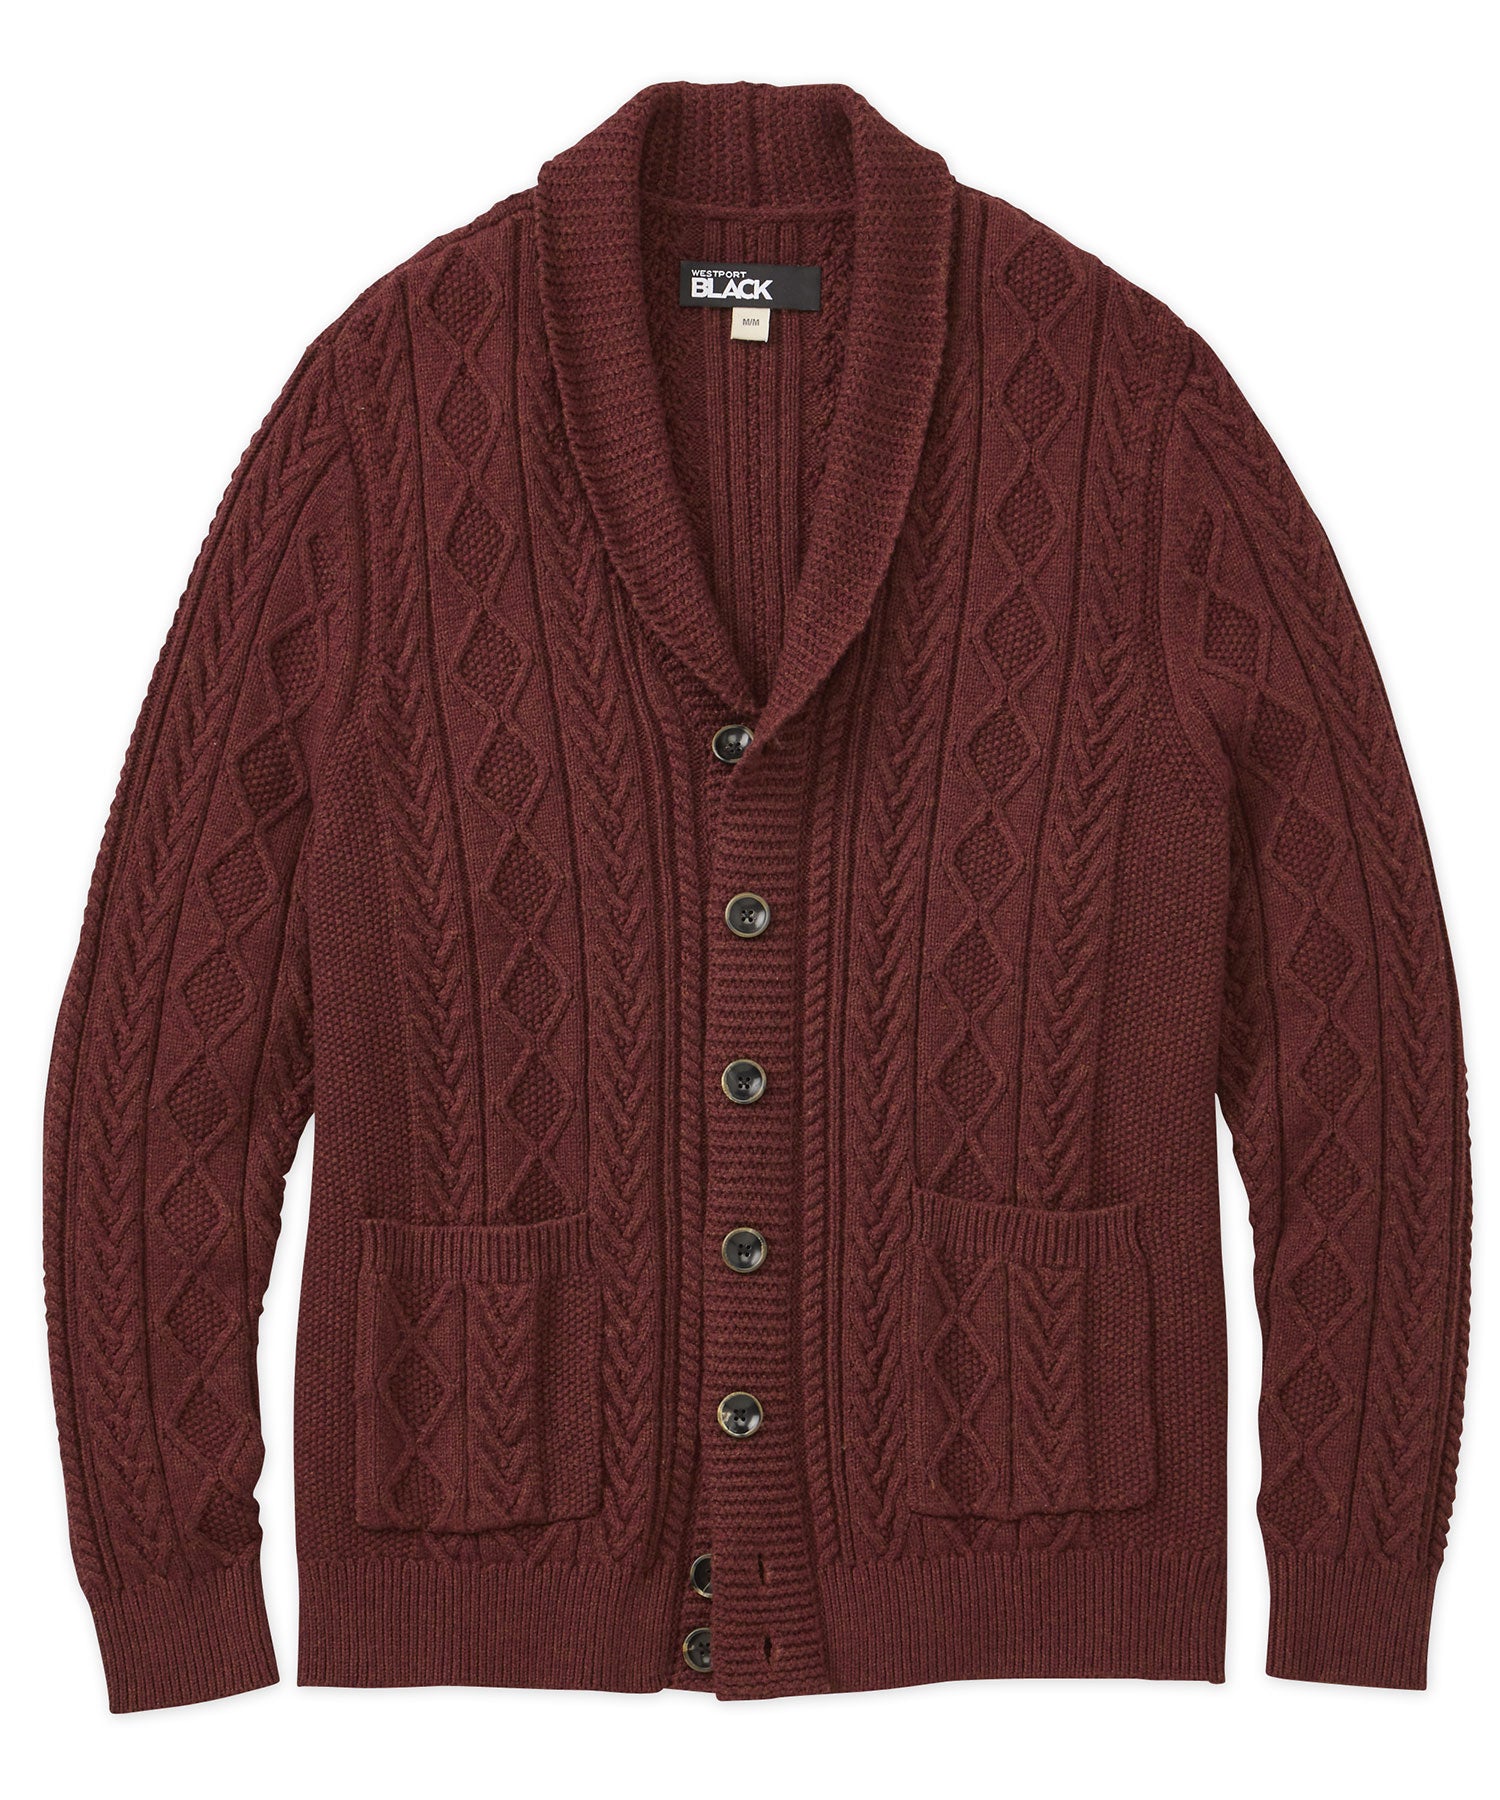 Westport Black Shawl Collar Cable Cardigan Sweater, Men's Big & Tall